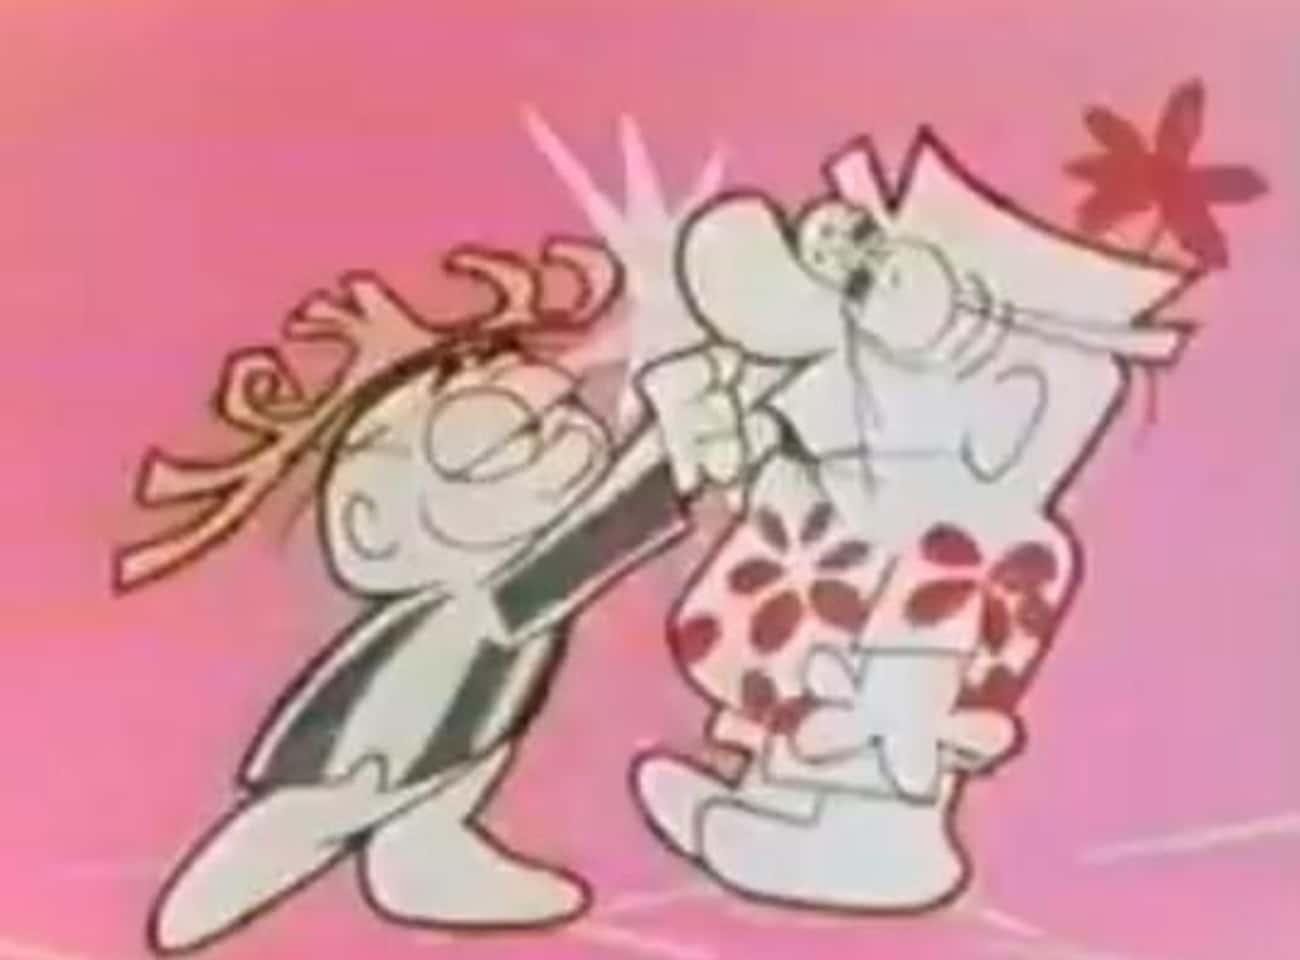 1962: Hawaiian Punch - 'How About A Nice Hawaiian Punch?'